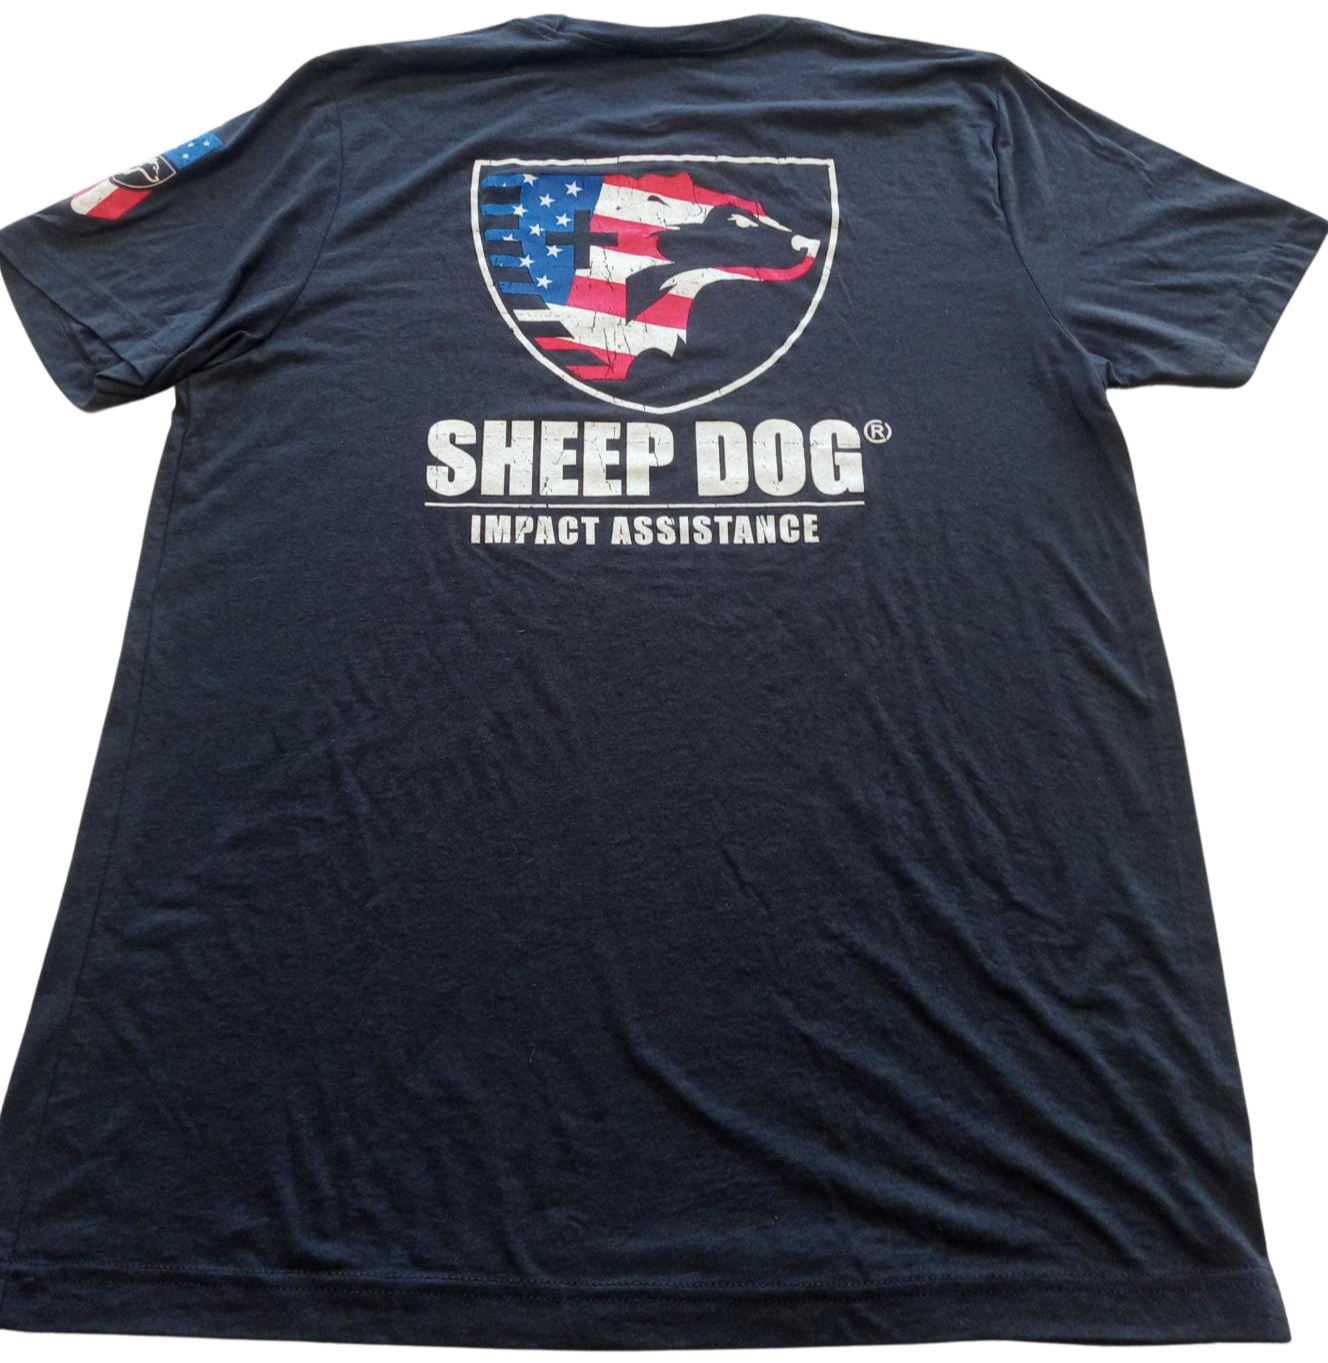 Red/White/Blue Sheep Dog T-Shirt